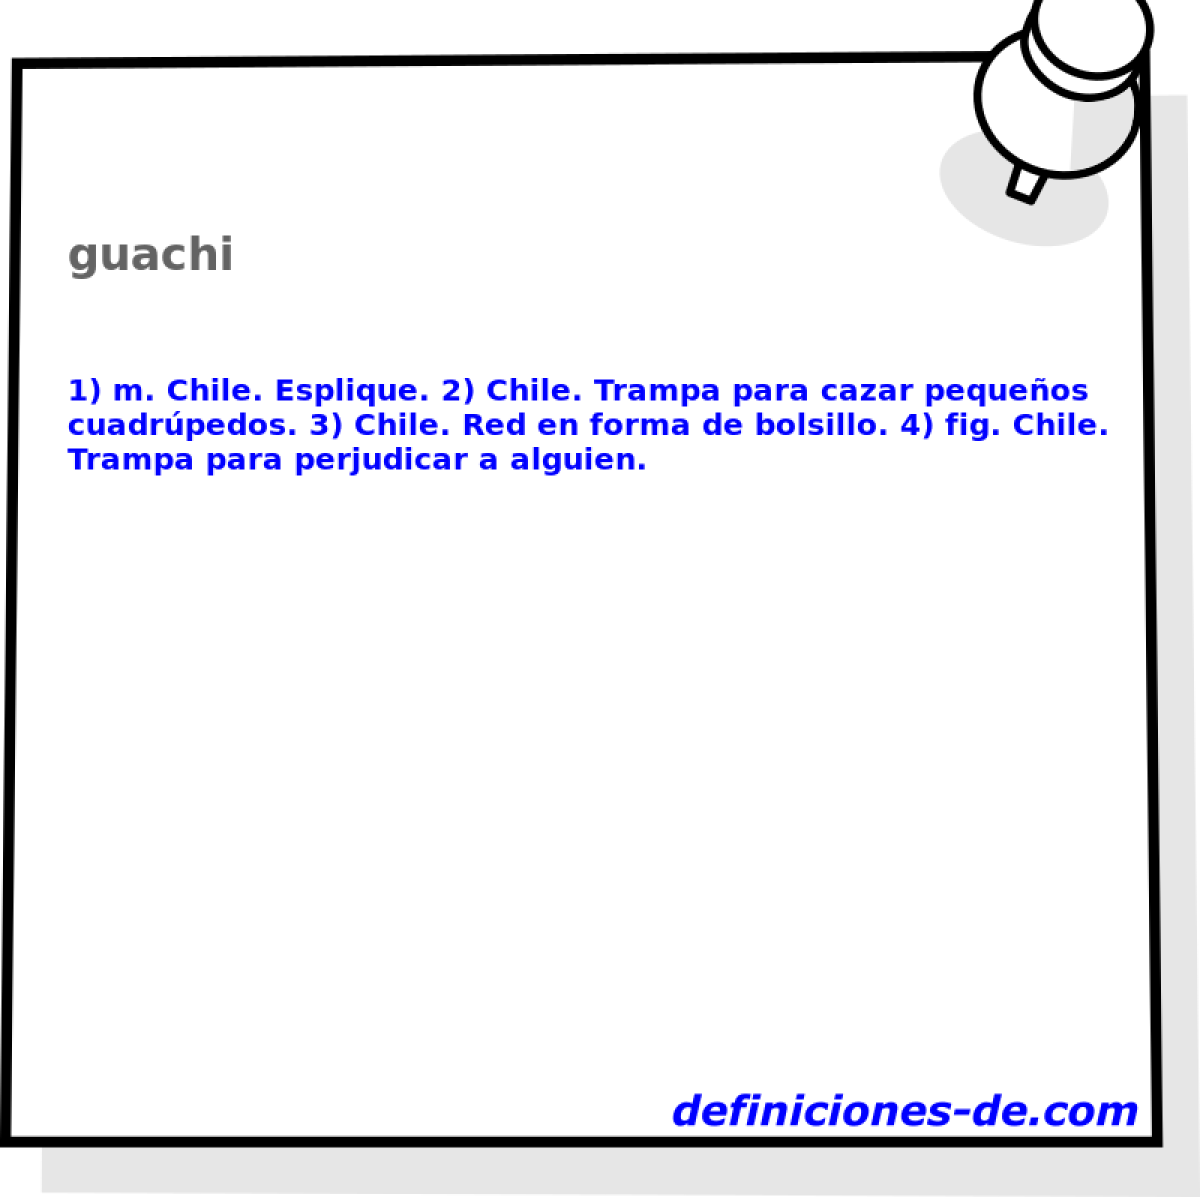 guachi 